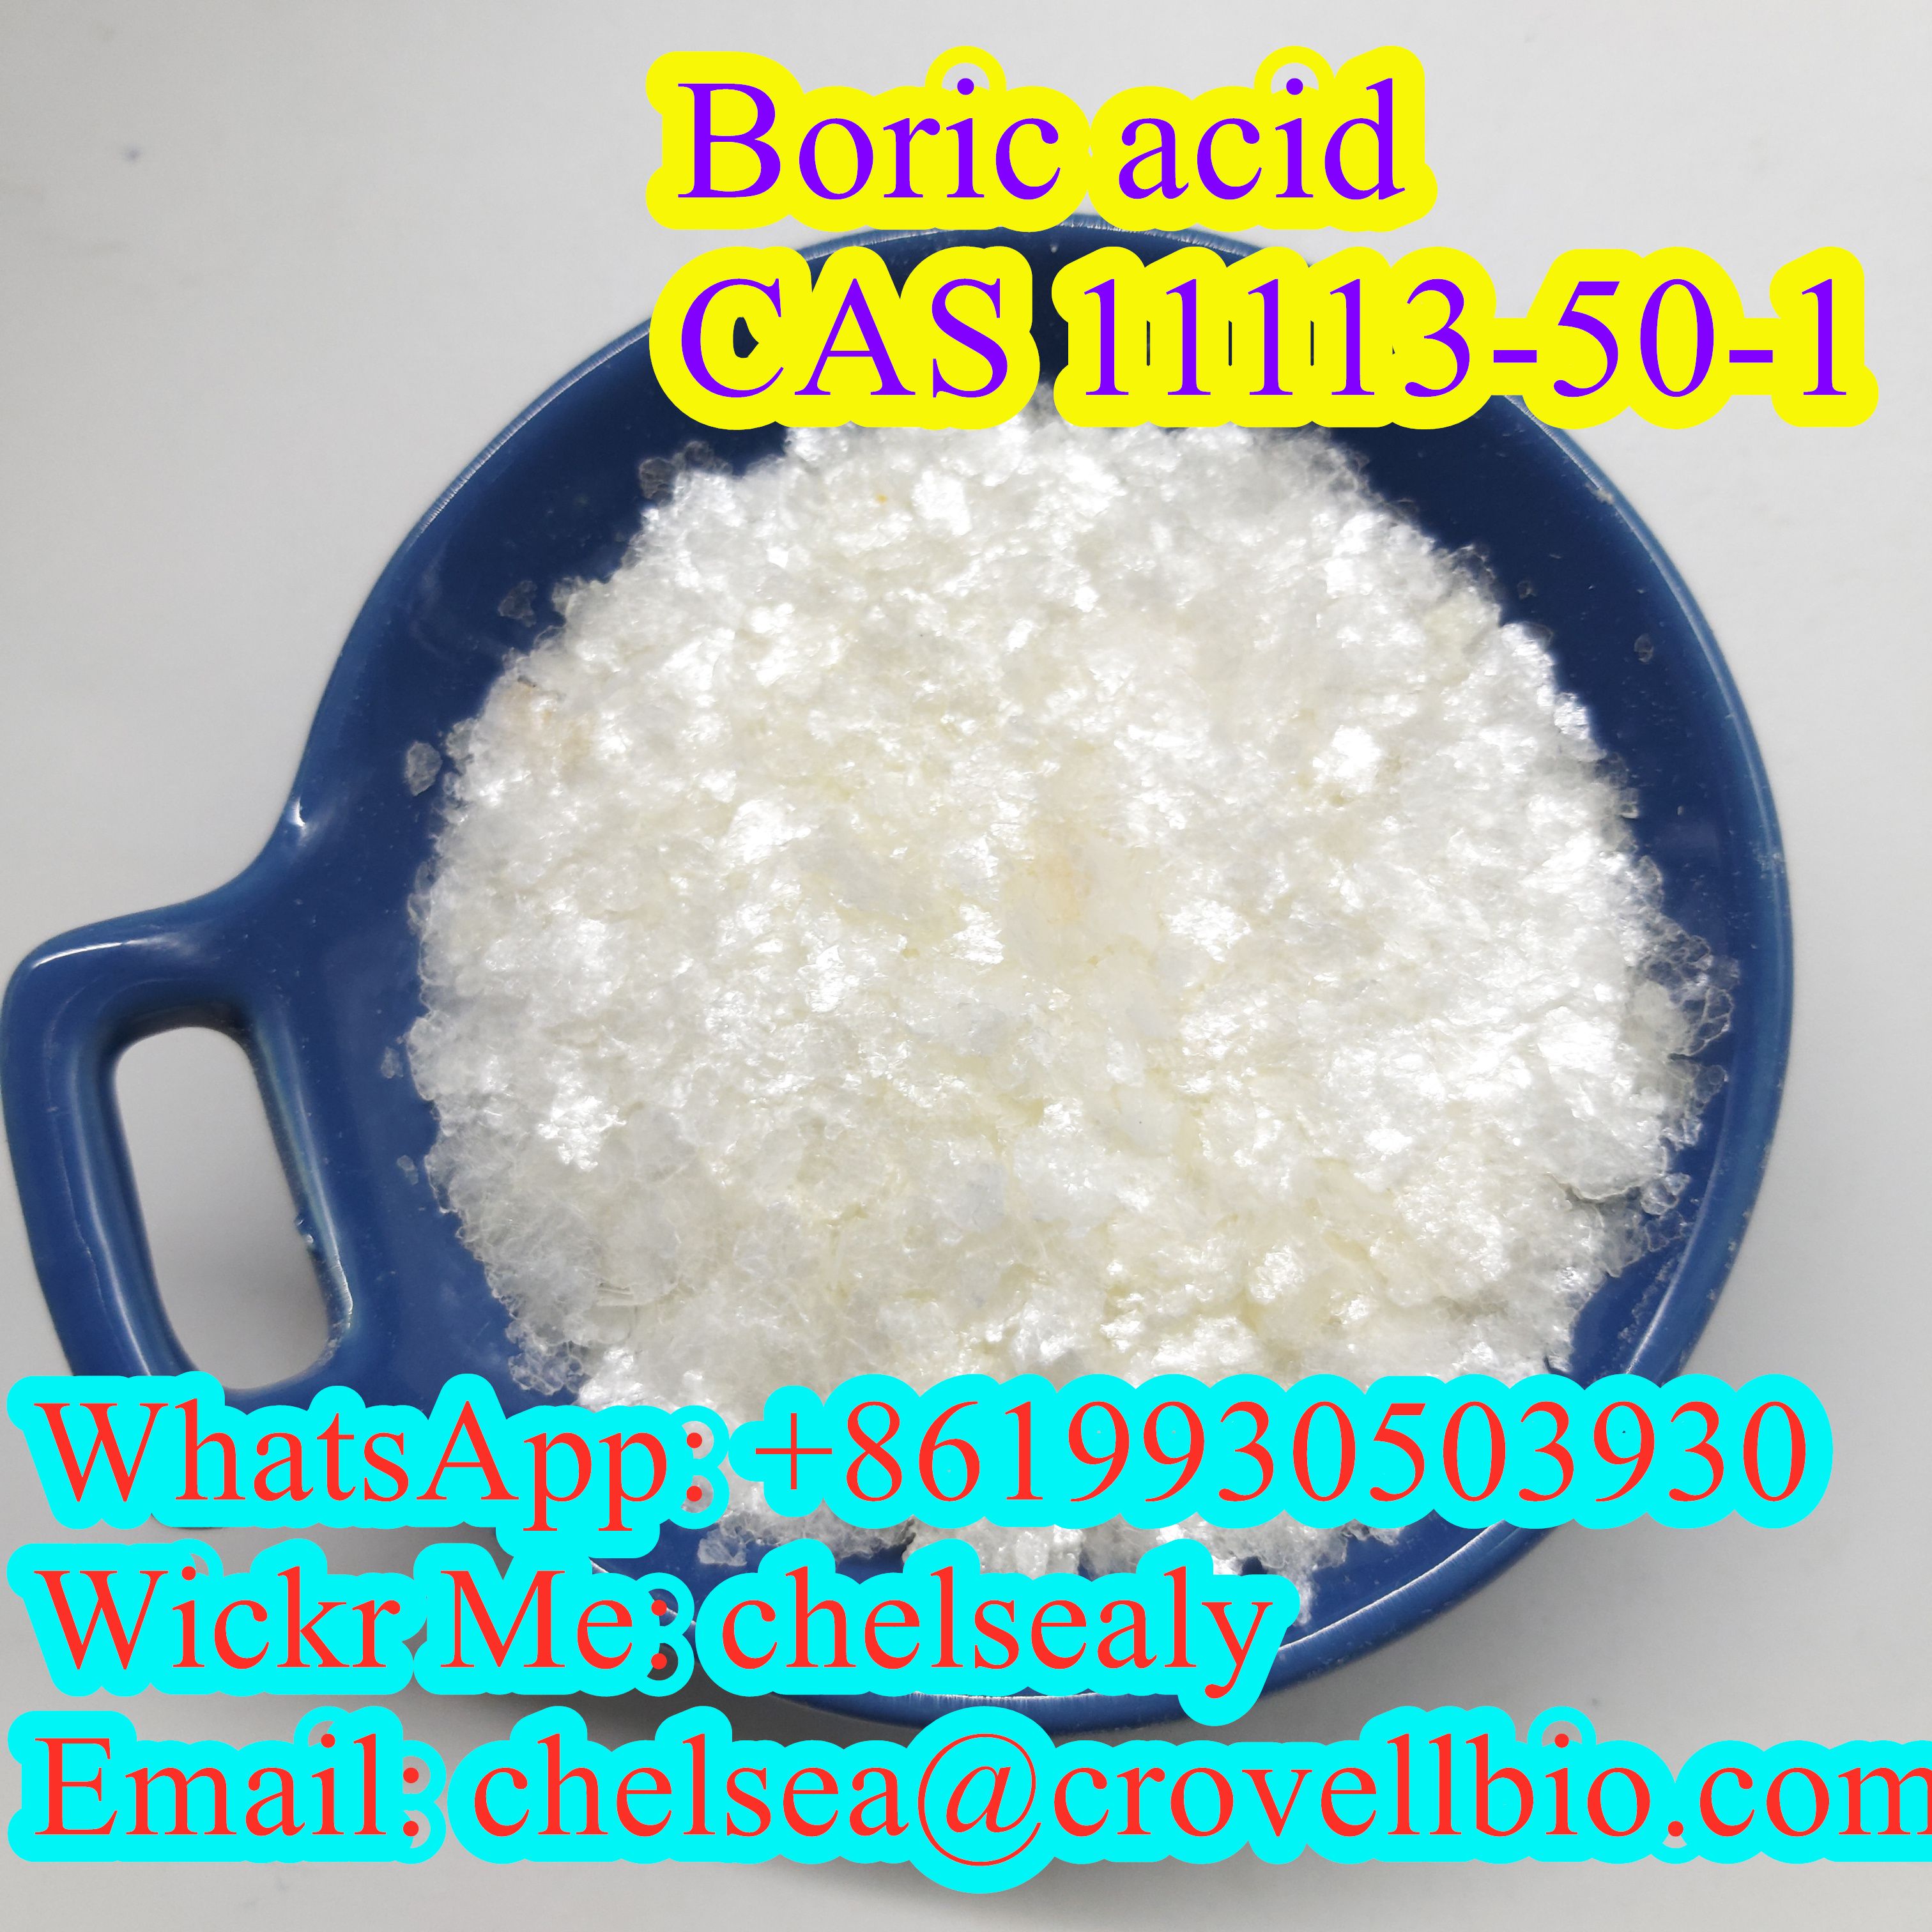 Boric acid CAS 11113-50-1 suppliers in China.WhatsApp: +8619930503930